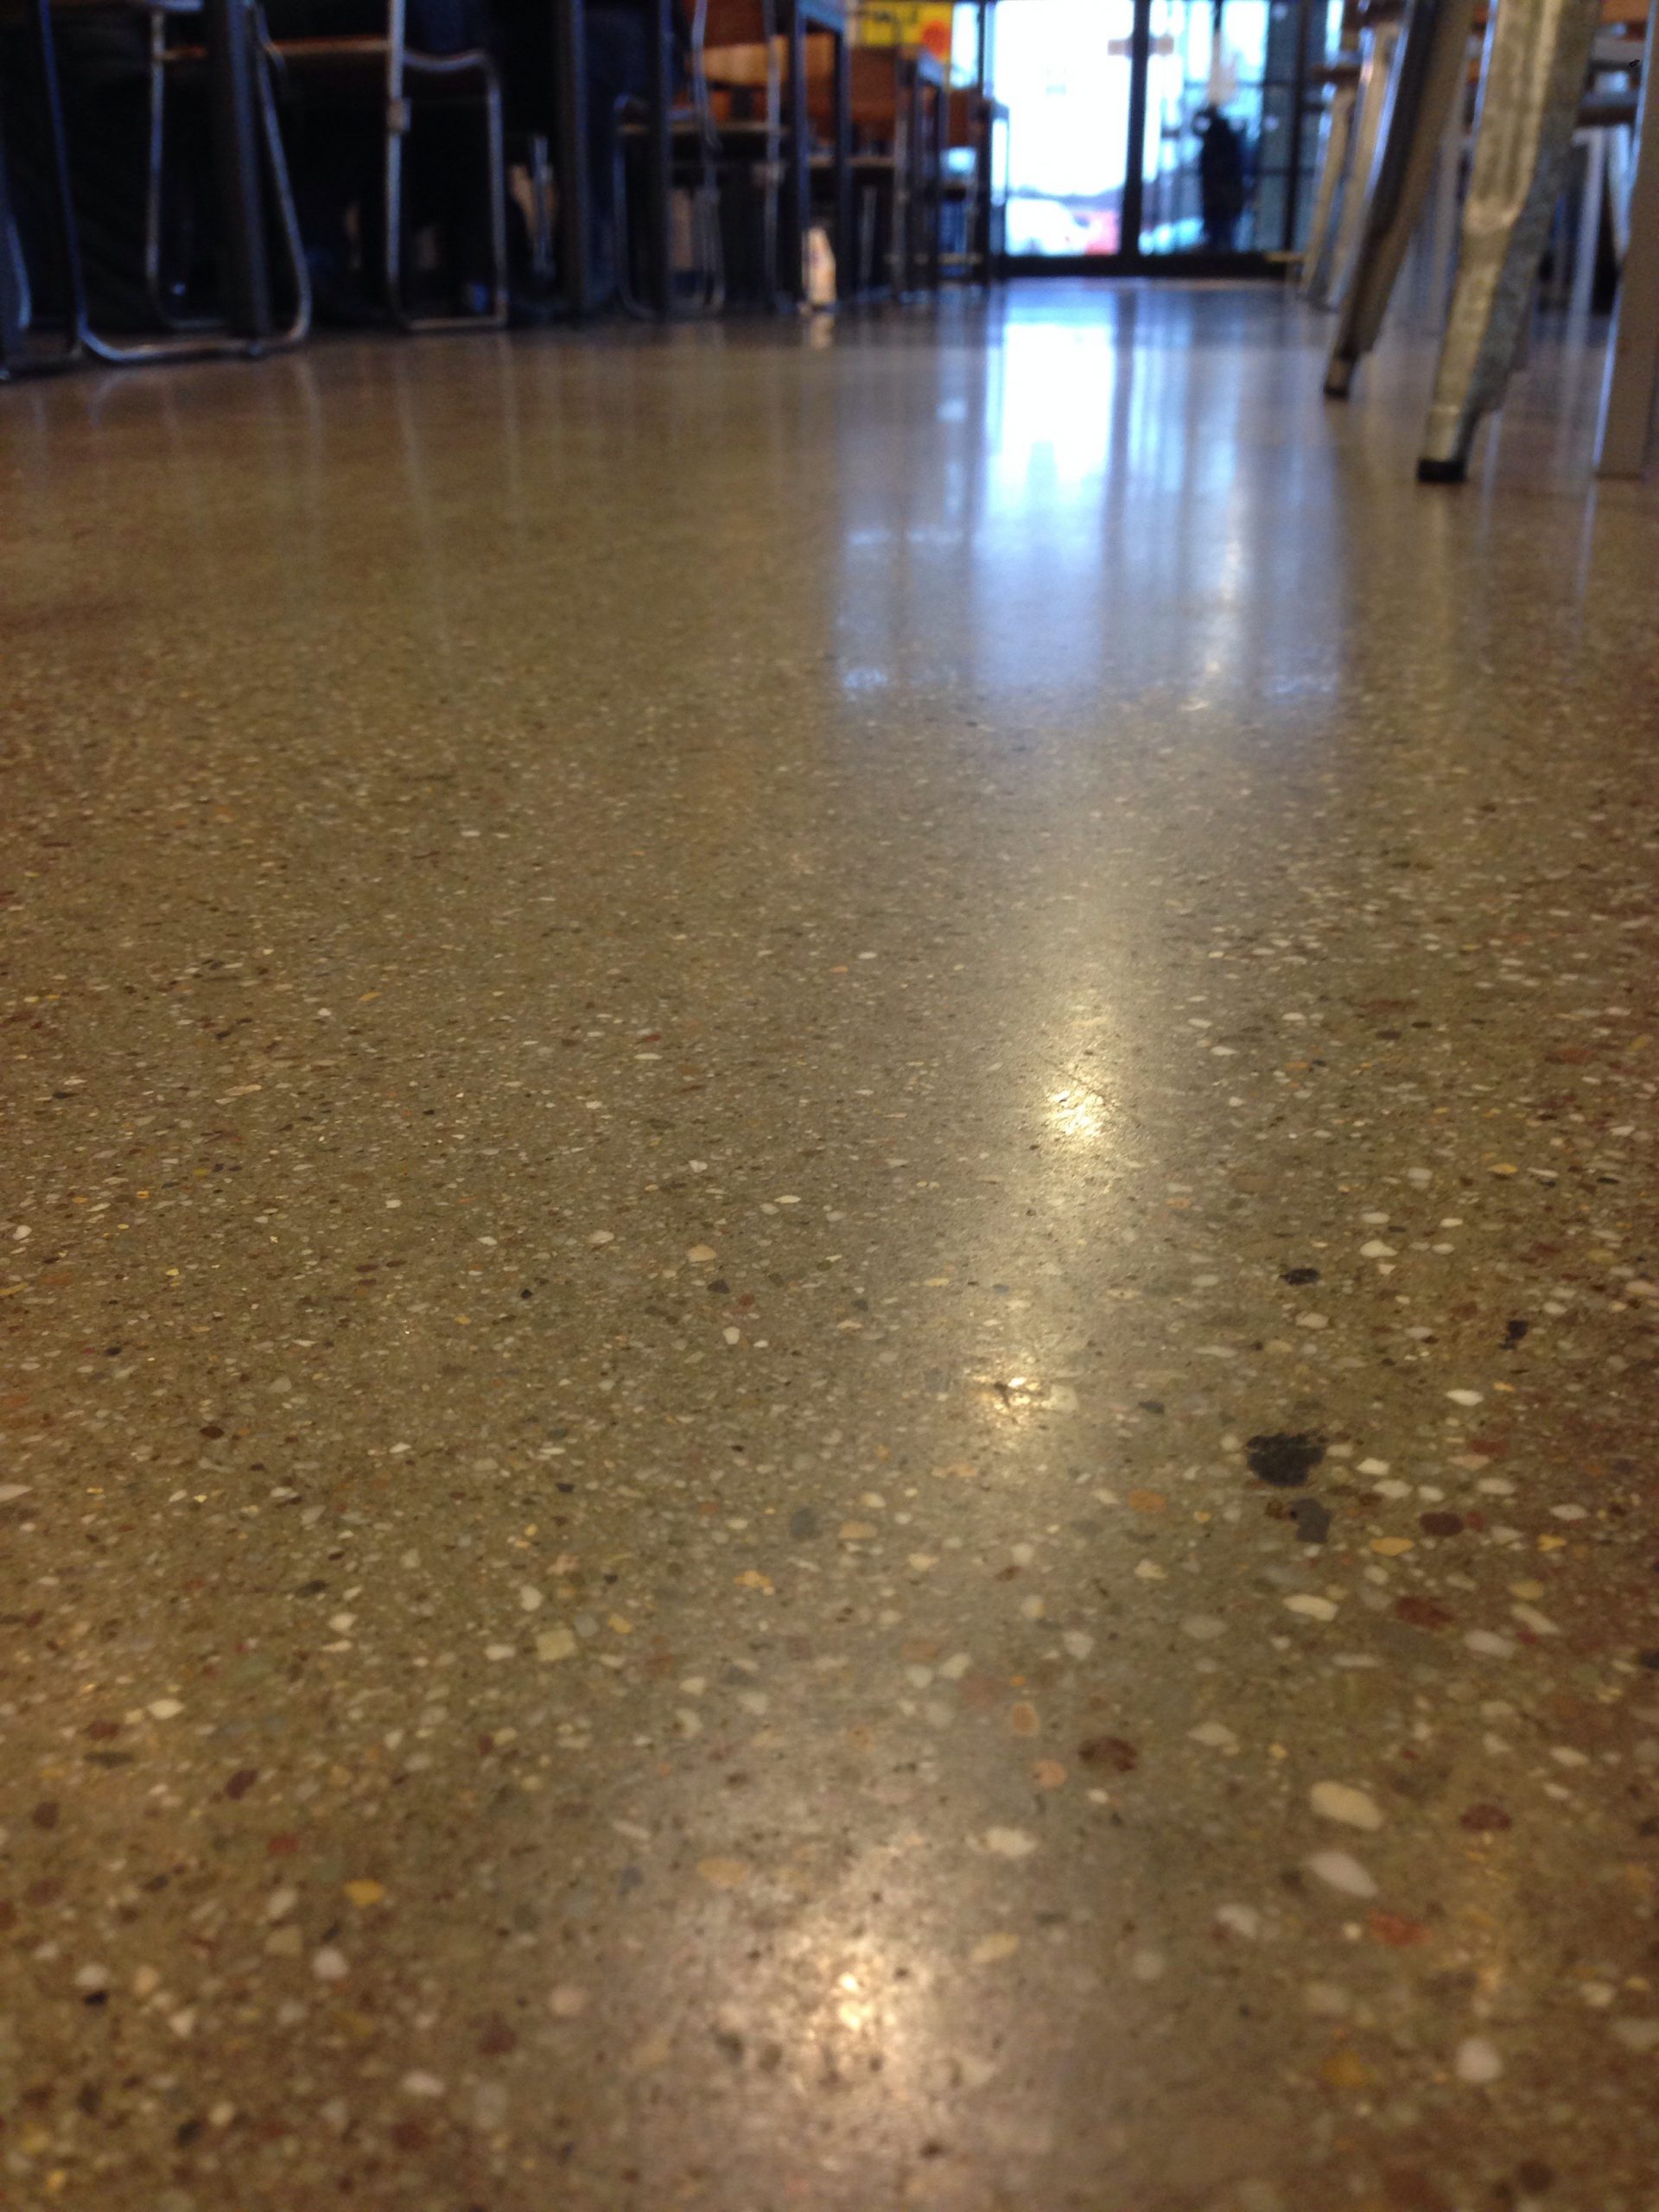 Professionally polished concrete floor